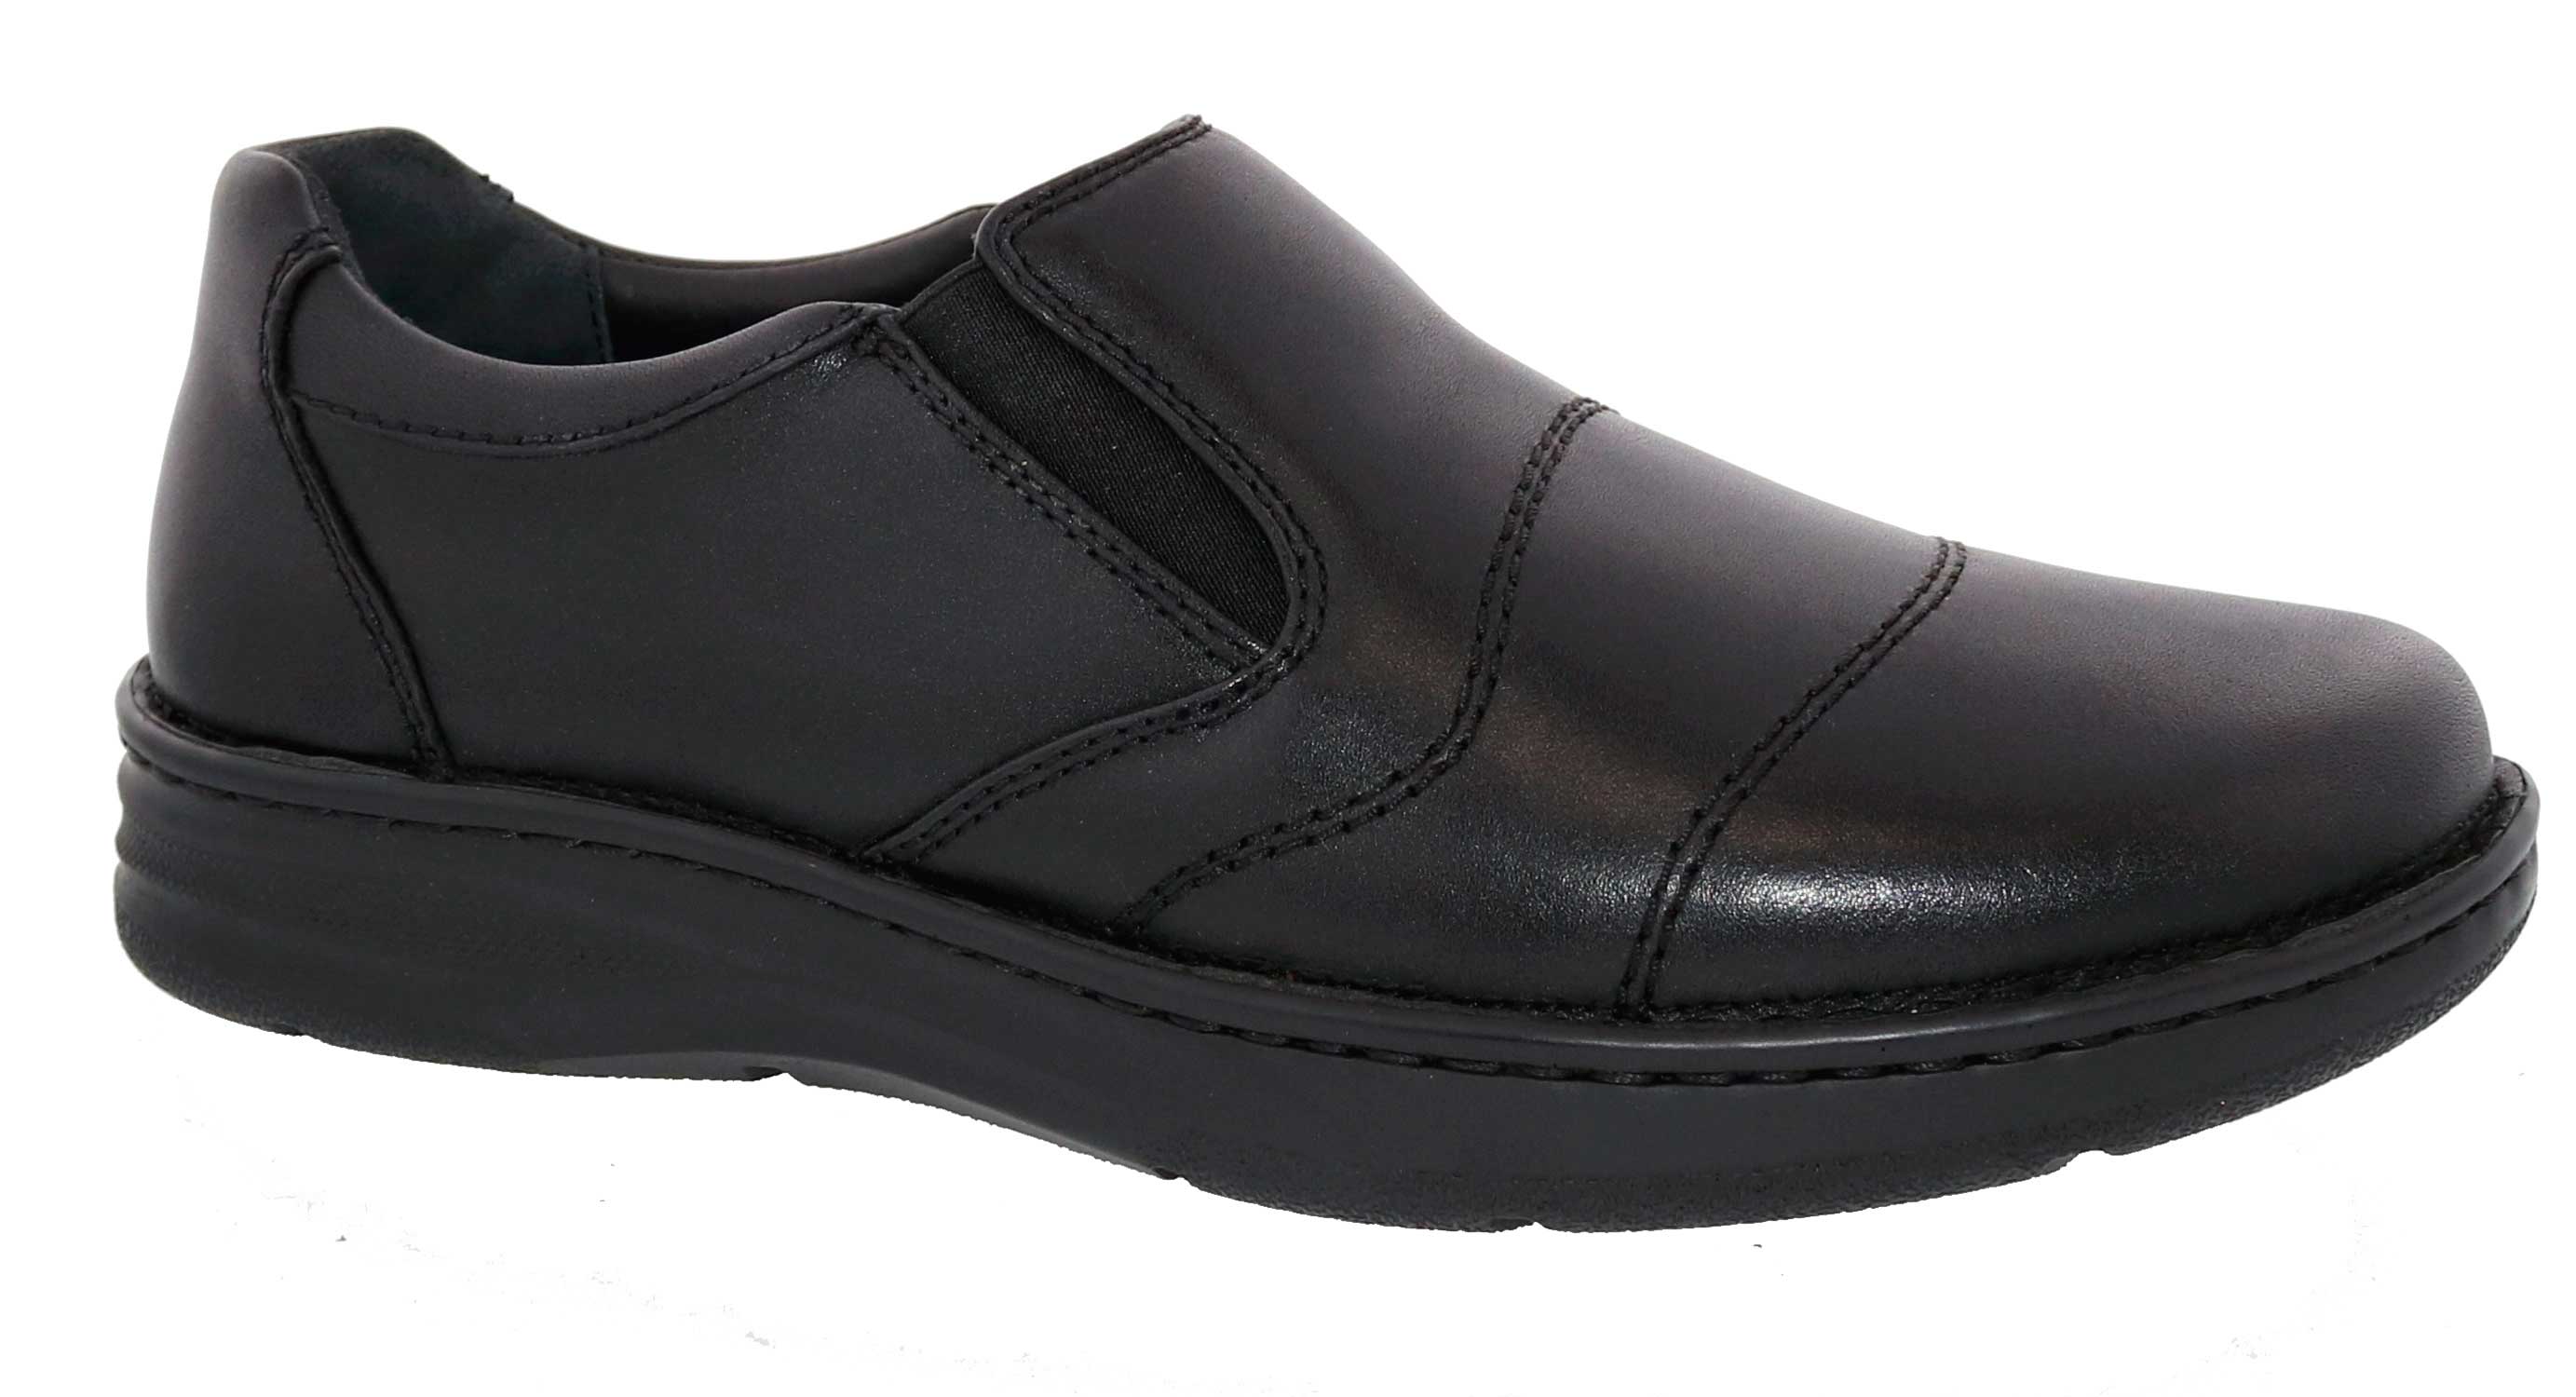 Drew Shoes Fairfield 43906 - Men's Casual Comfort Therapeutic Diabetic Shoe - Extra Depth For Orthotics